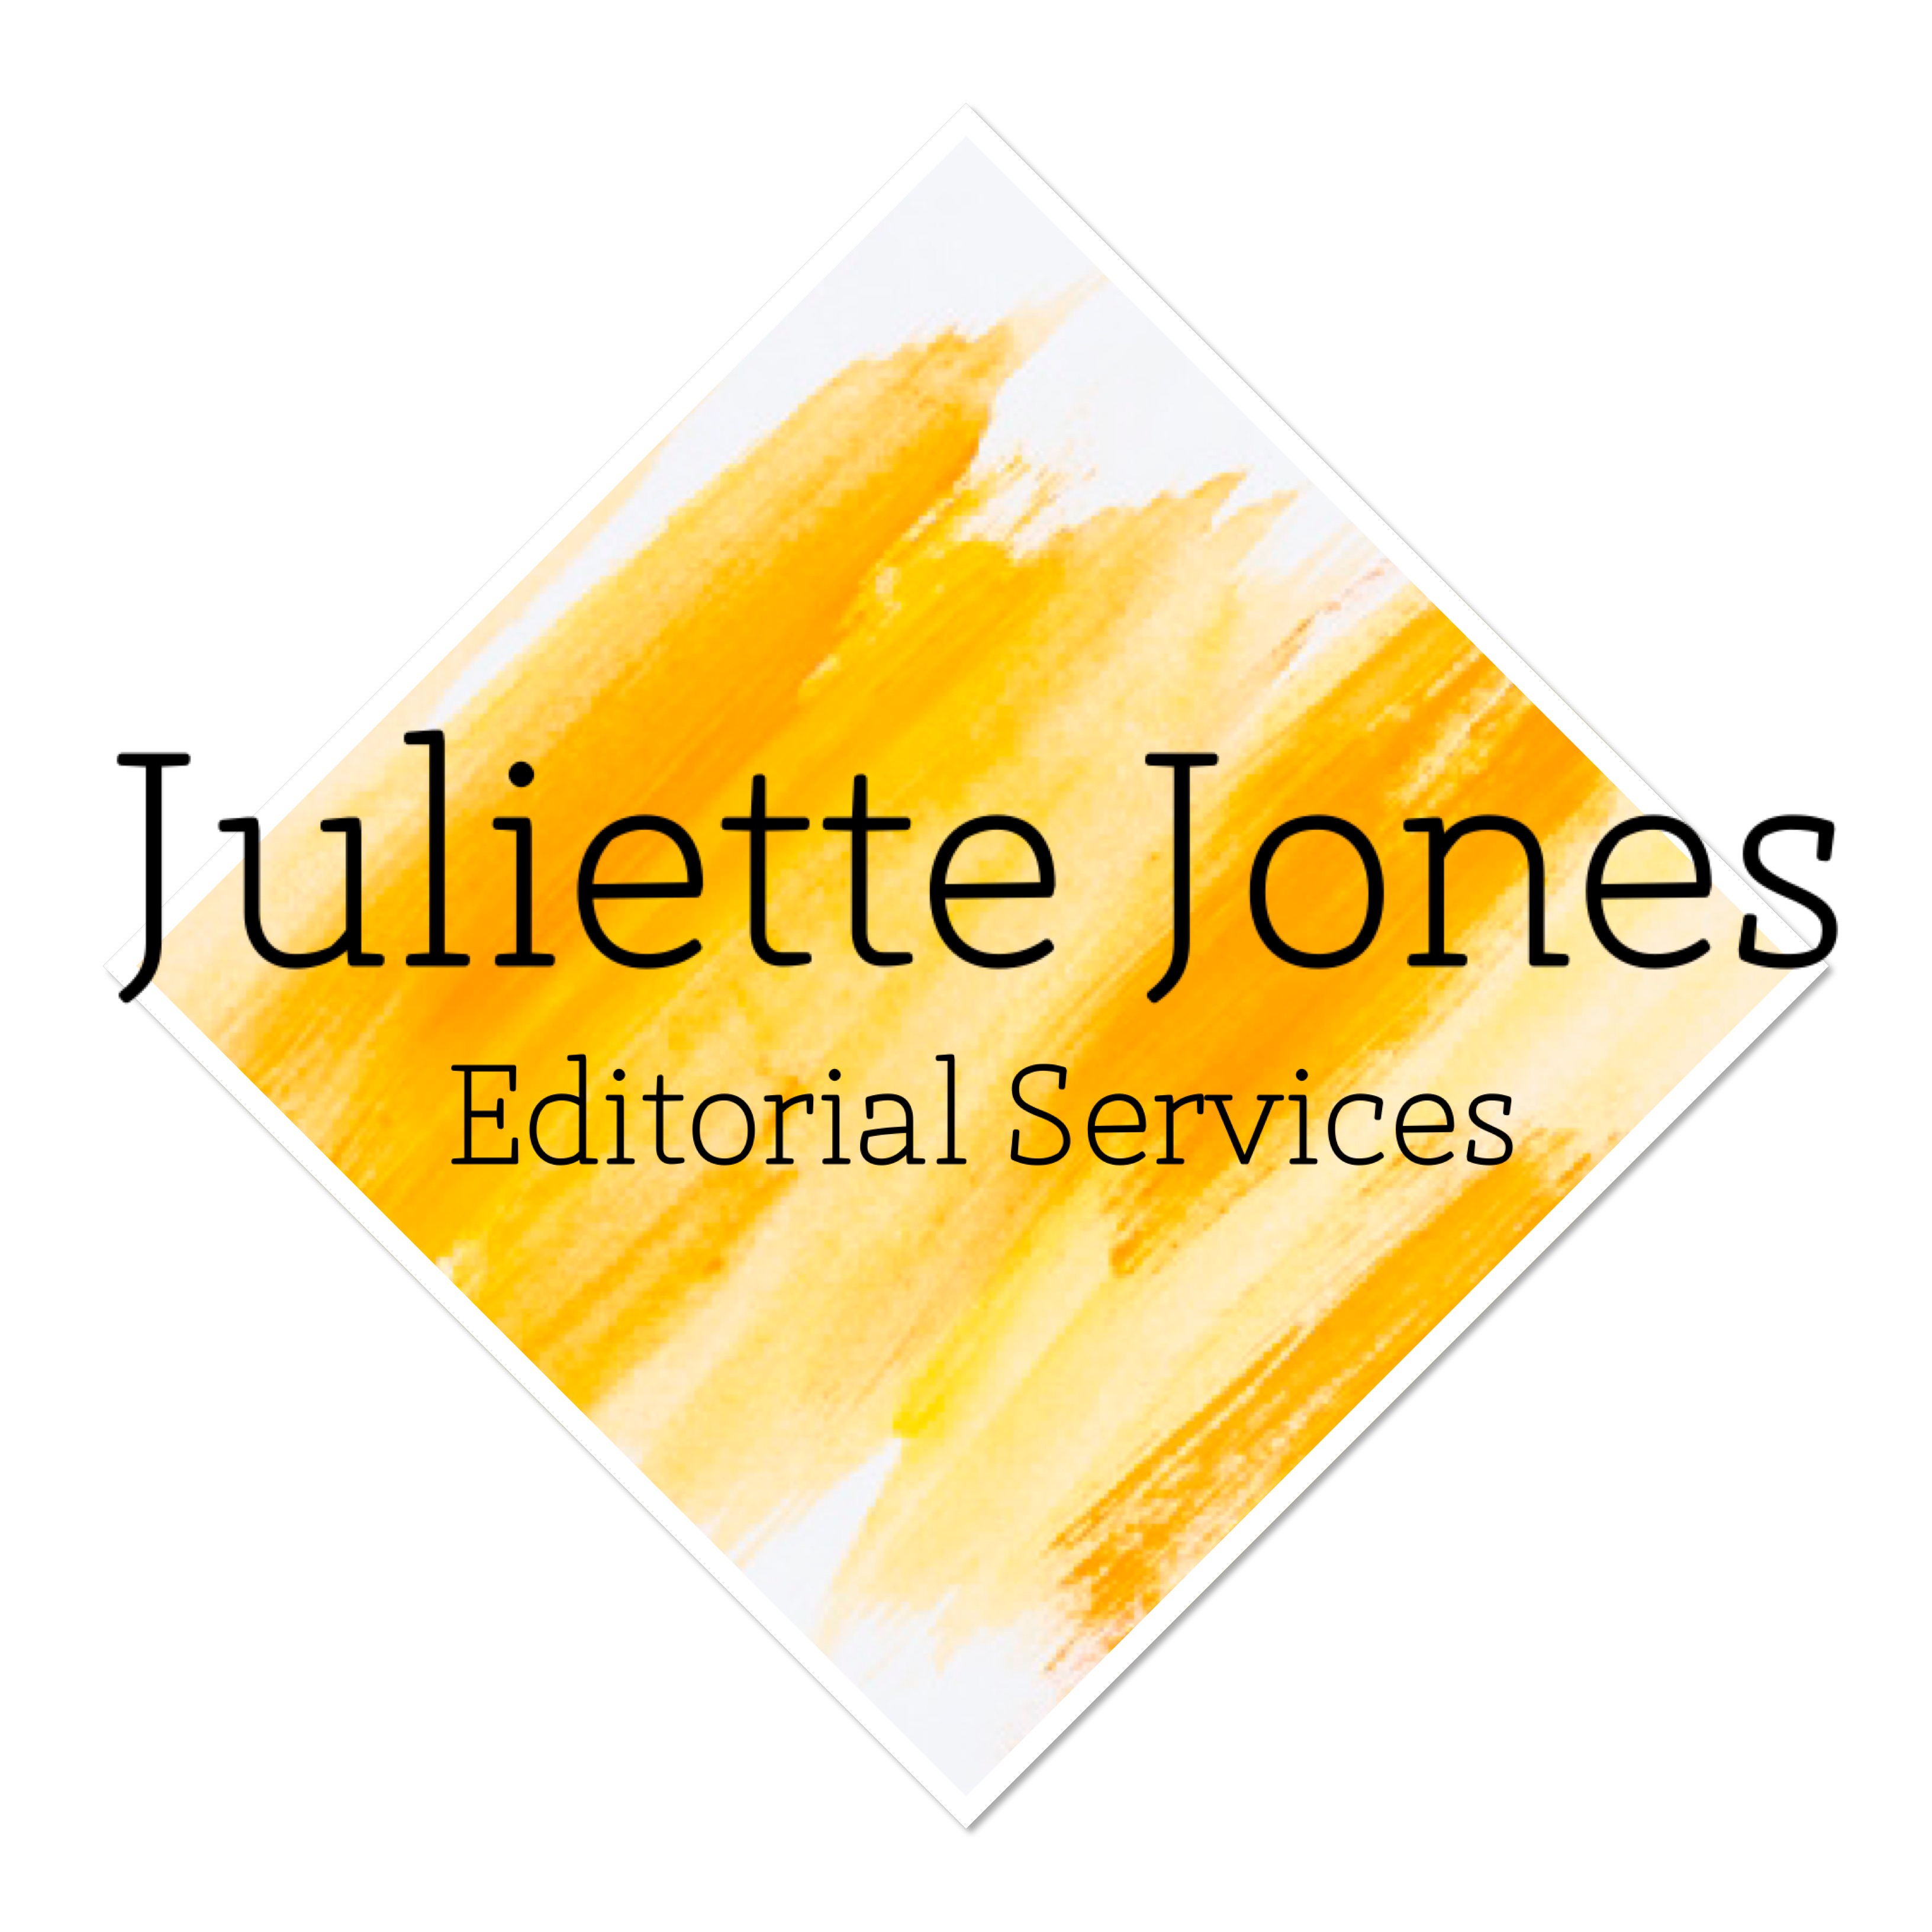 Juliette Jones Editorial Services